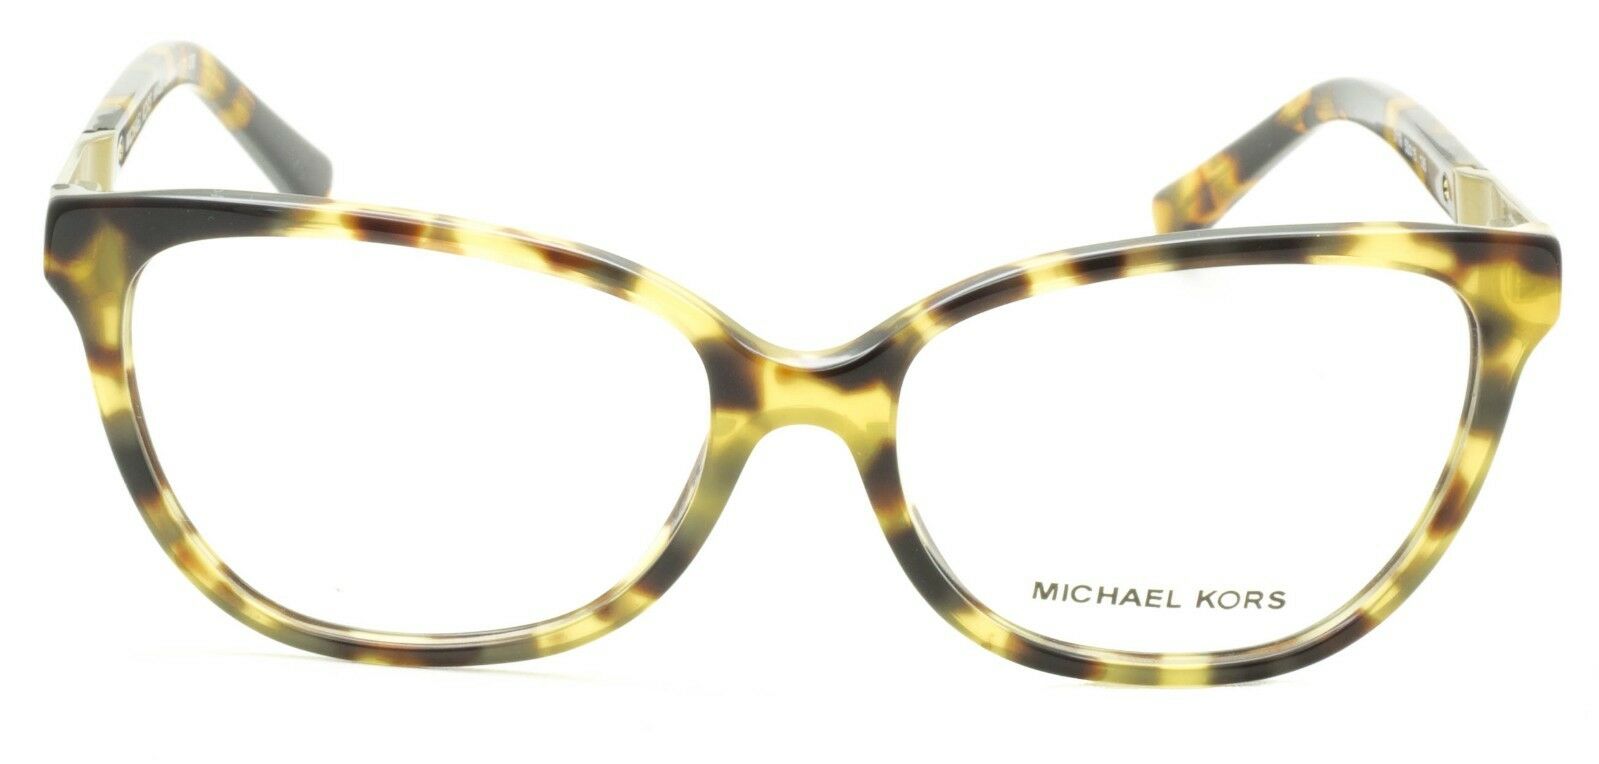 MICHAEL KORS MK 4029 3119 Adelaide III Eyewear FRAMES RX Optical Glasses - New